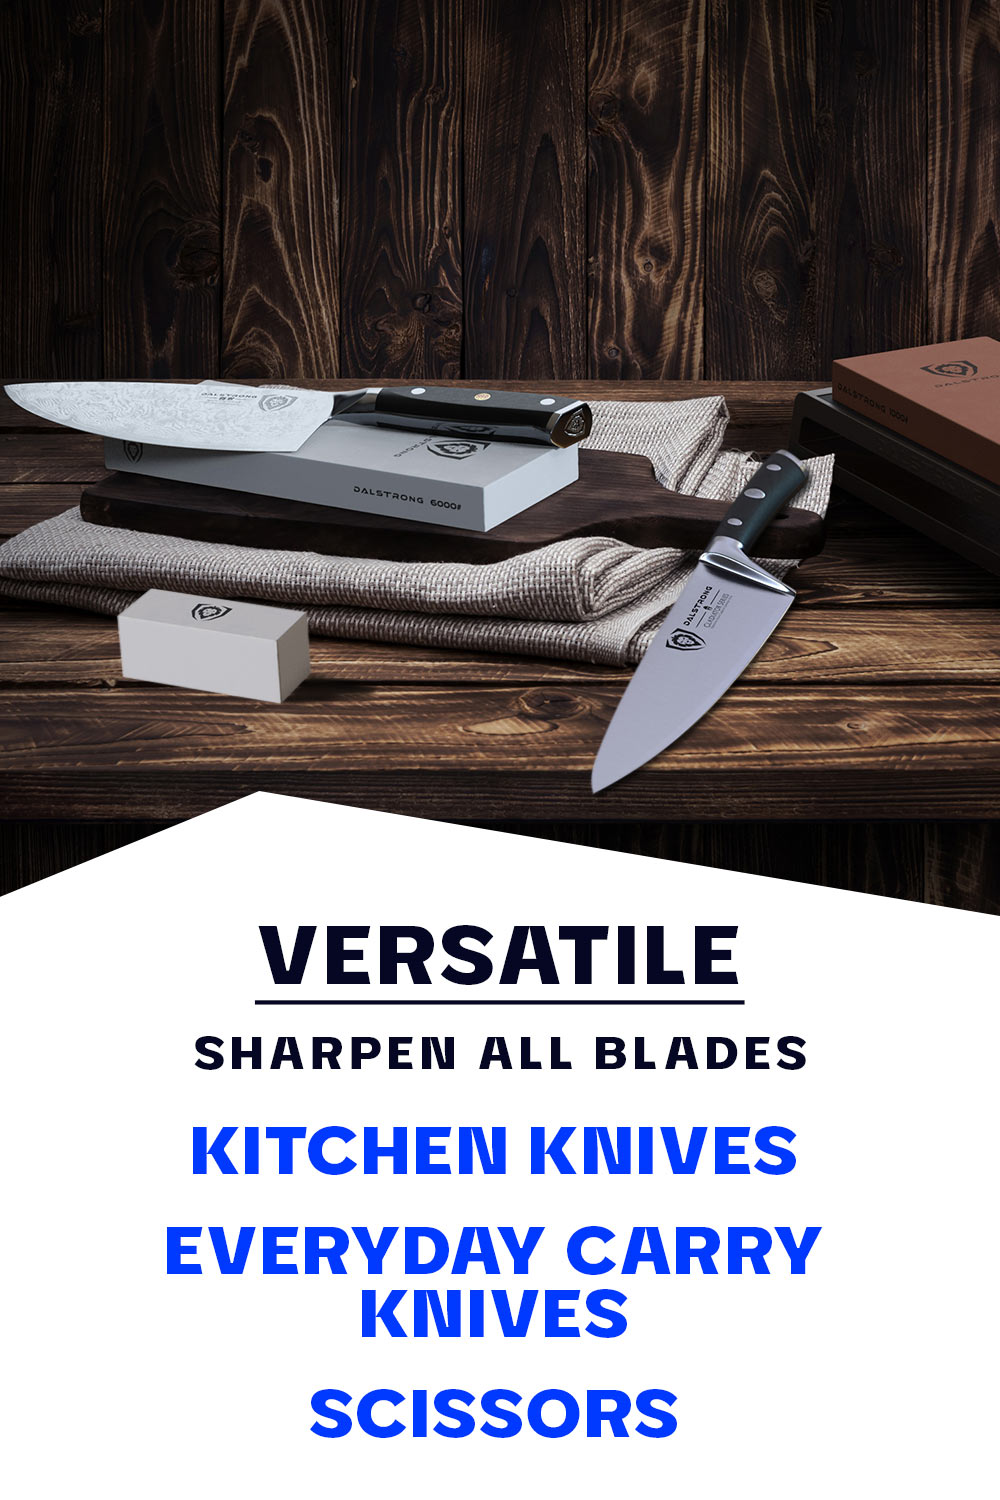 Dalstrong Premium Whetstone Kit #400/#1000 Knife Sharpening Set